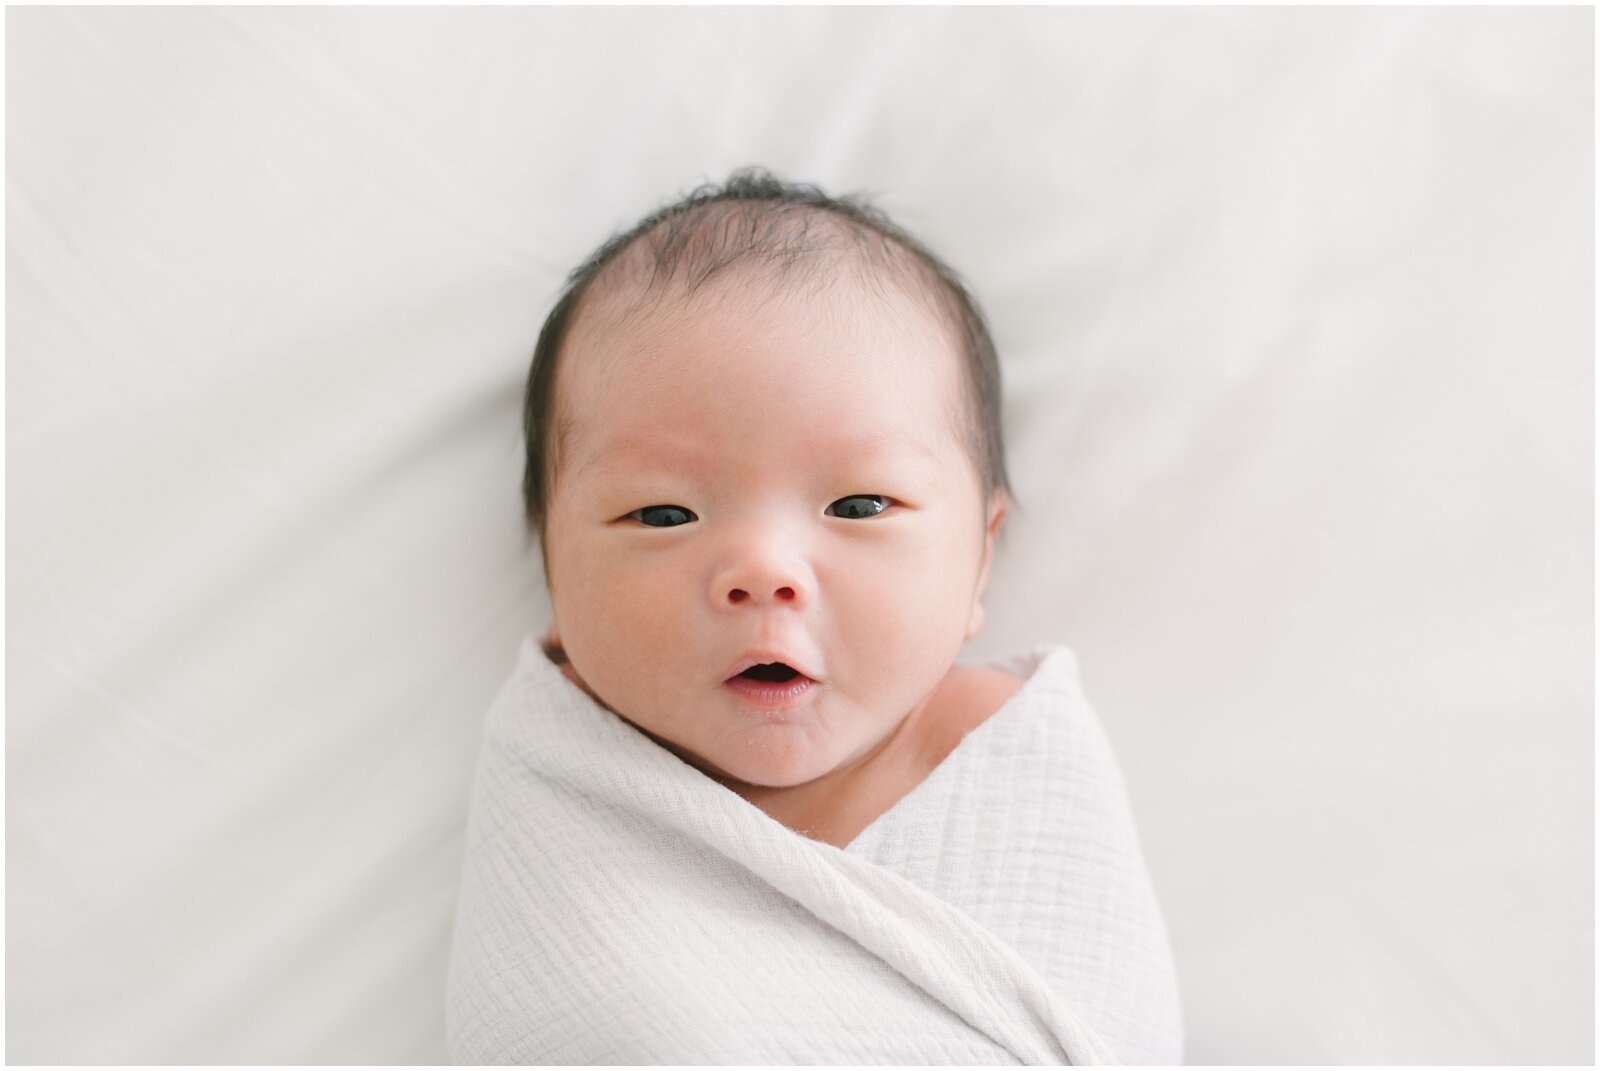  Baby boy newborn - awake and alert. NKB Photo New Jersey.  